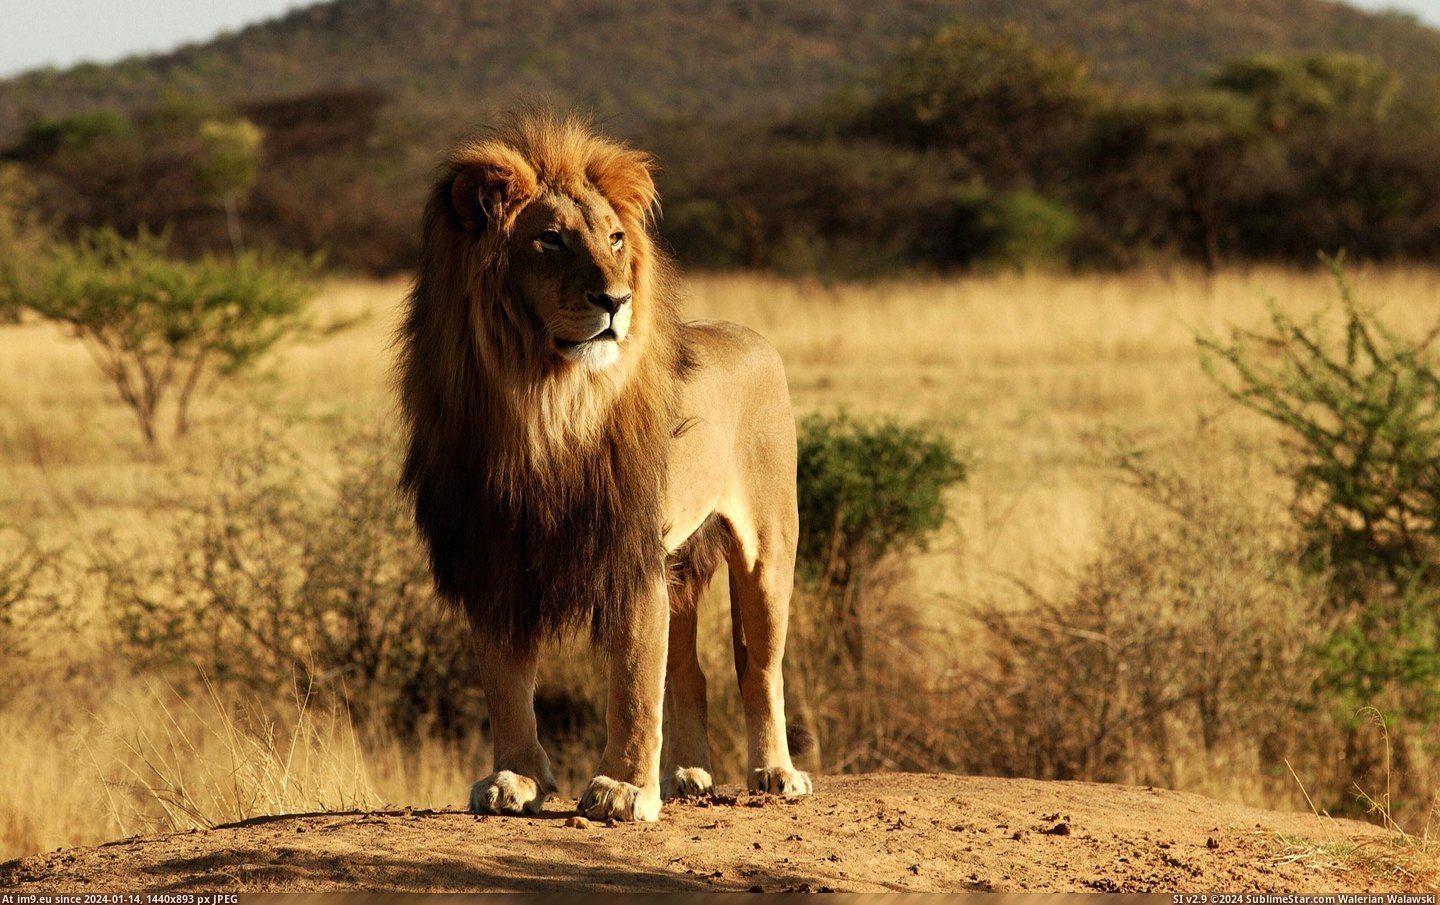 #Wallpaper #Beautiful #Lion #Wide #King King Lion Wide HD Wallpaper Pic. (Изображение из альбом Unique HD Wallpapers))